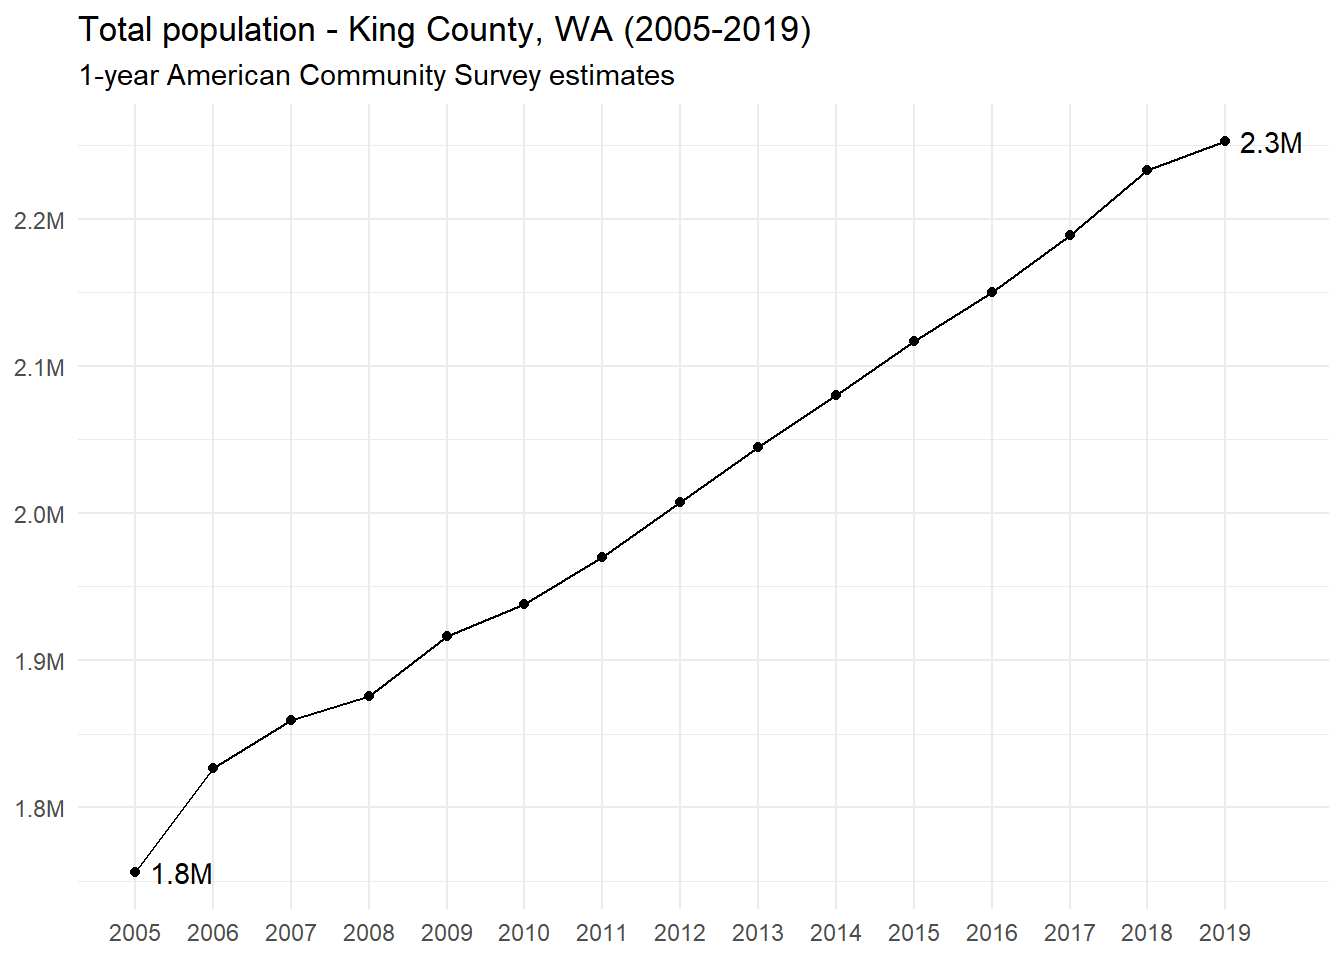 One-year ACS total population estimates - King County, WA (2005 - 2019)